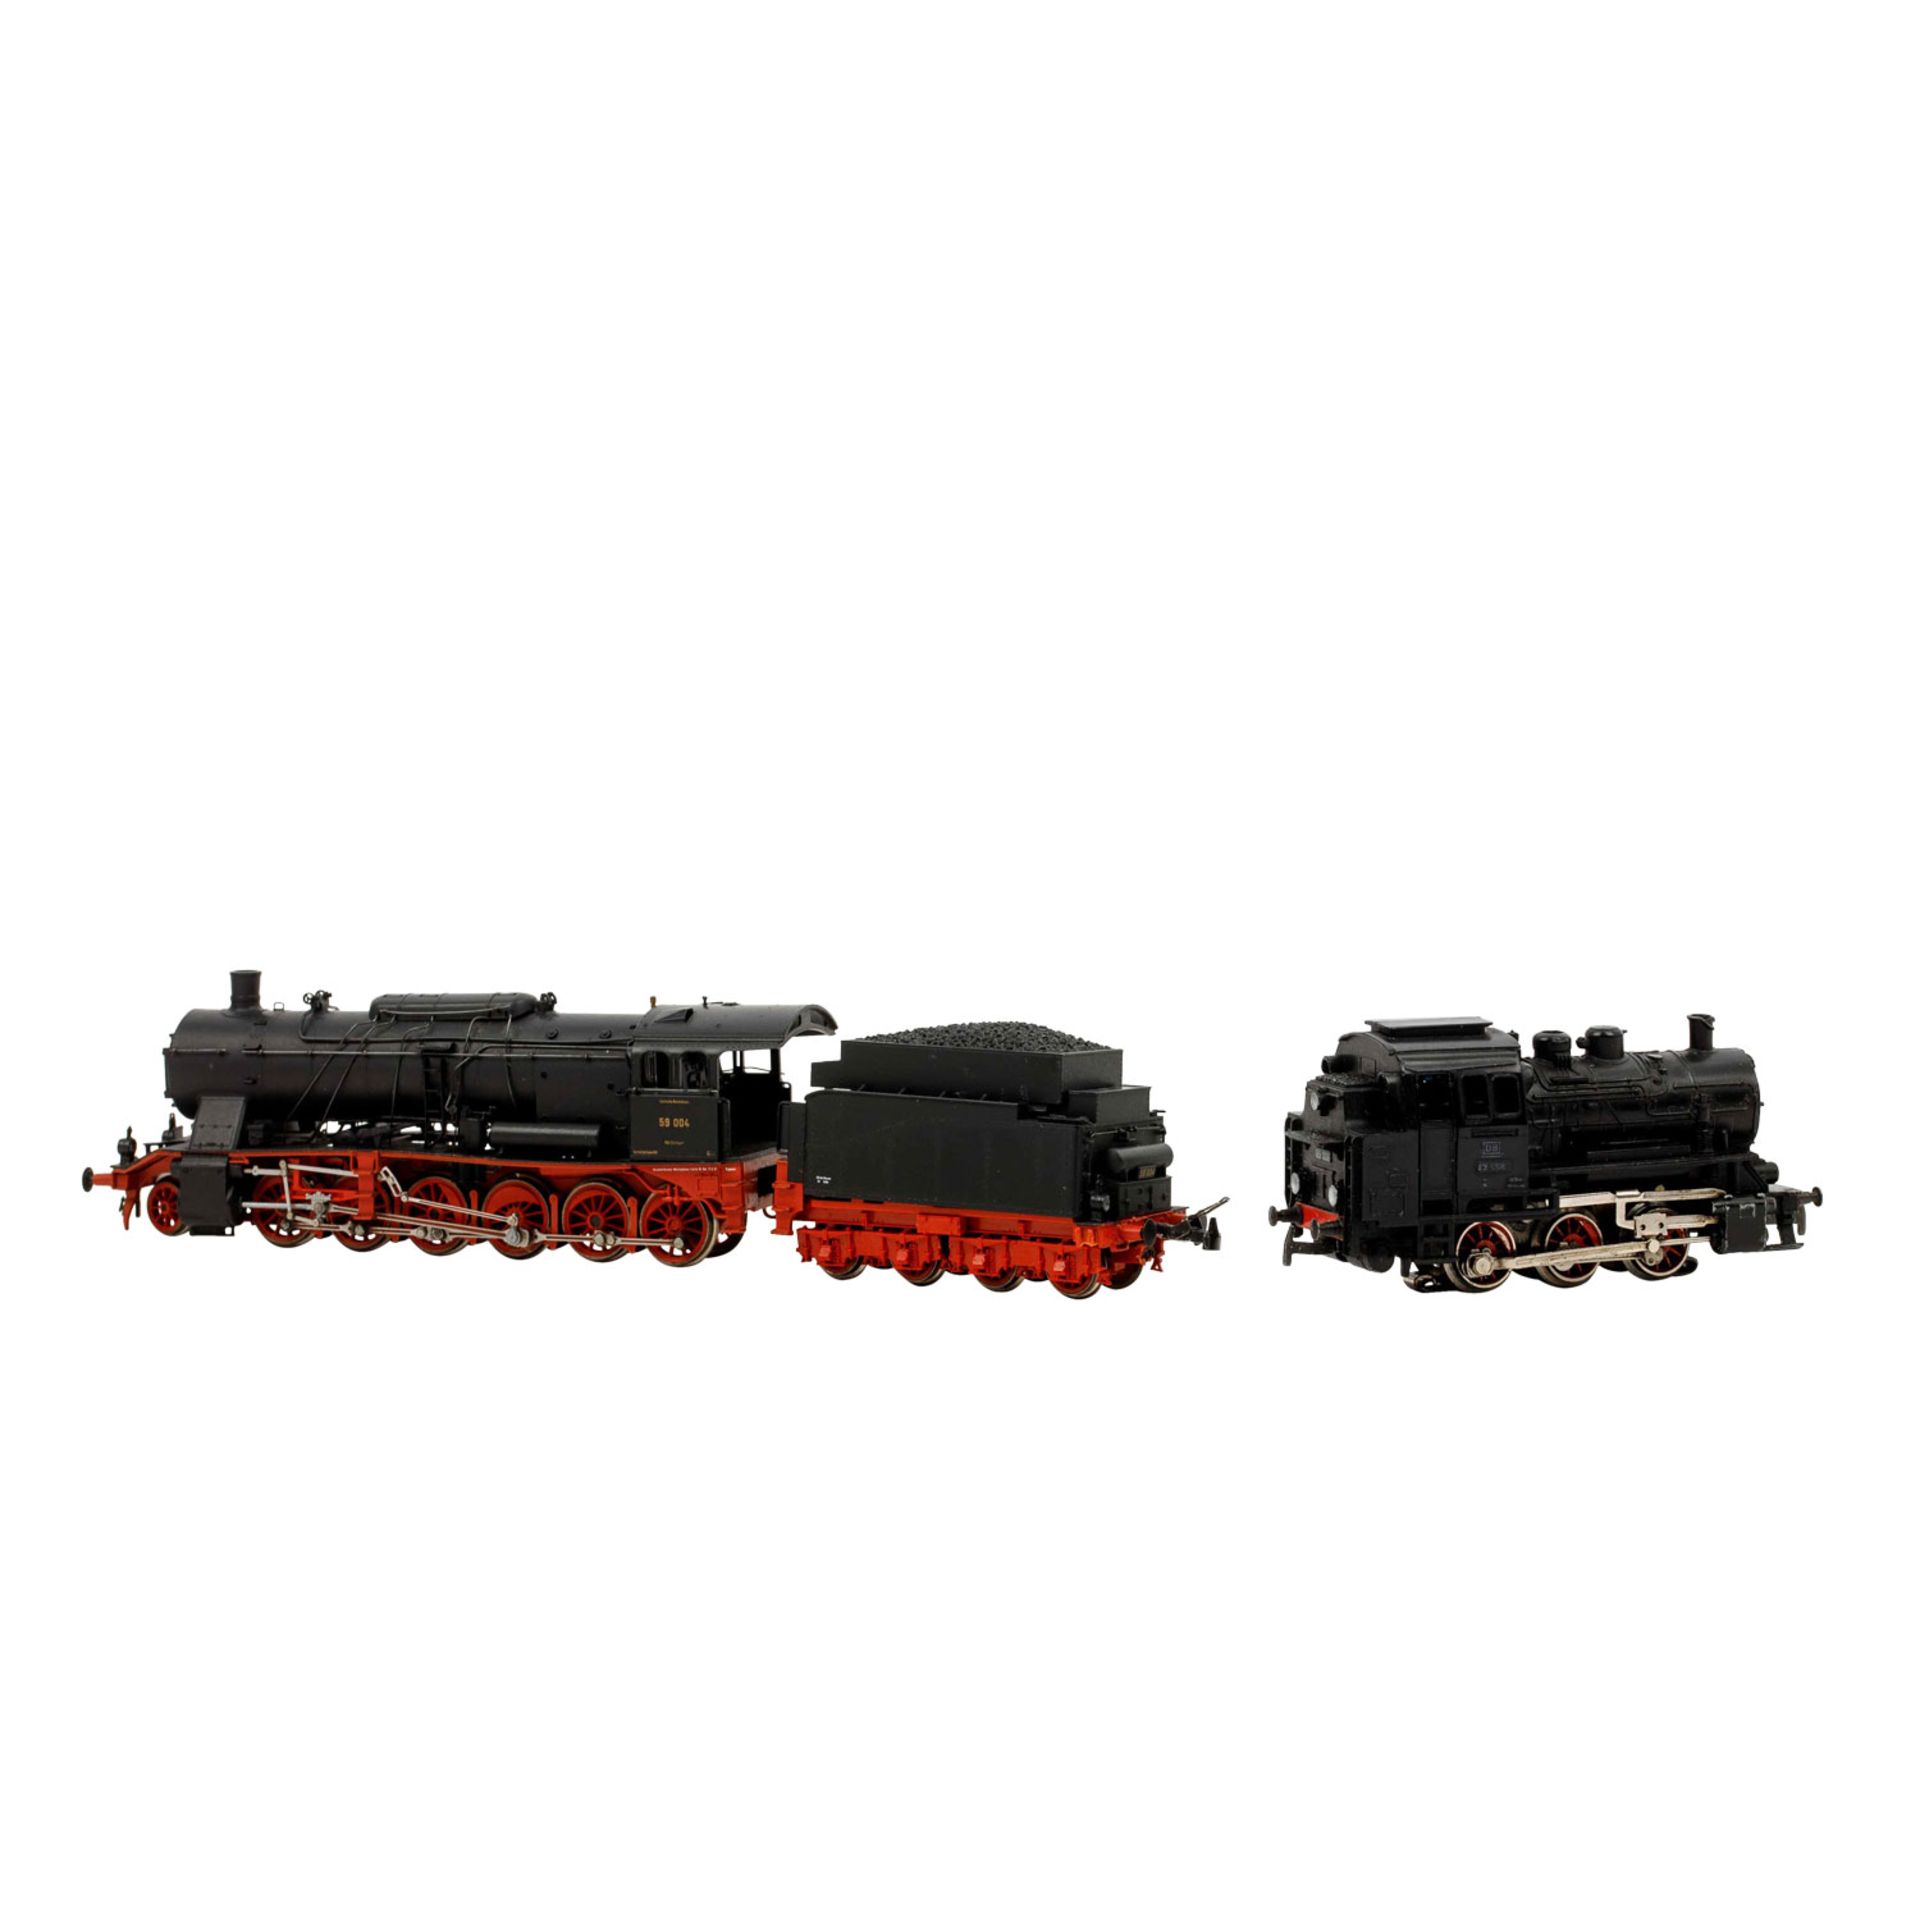 MÄRKLIN/RIVAROSSI Konvolut aus Starter Set 2943 und 2 Dampflokomotiven, Spur H0, - Bild 4 aus 4